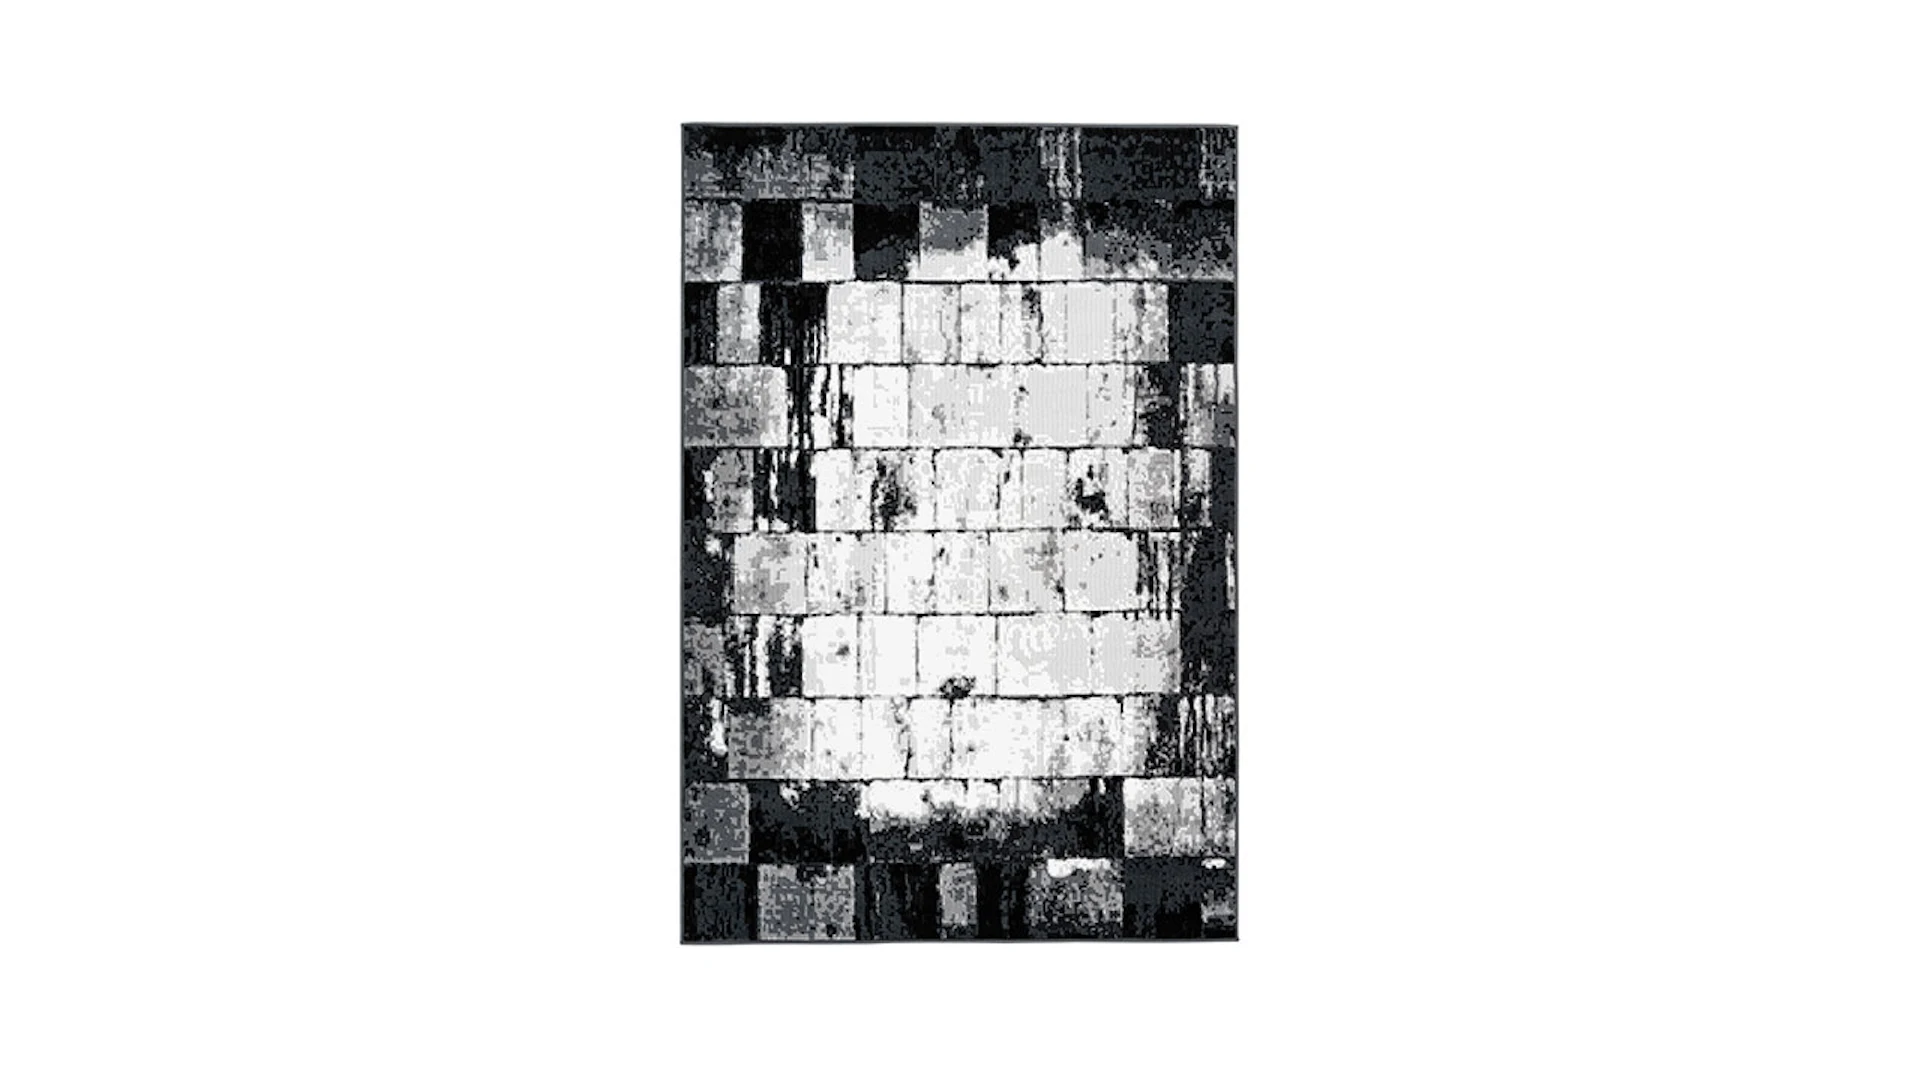 planeo carpet - Esperanto 325 grey / anthracite 80 x 150 cm